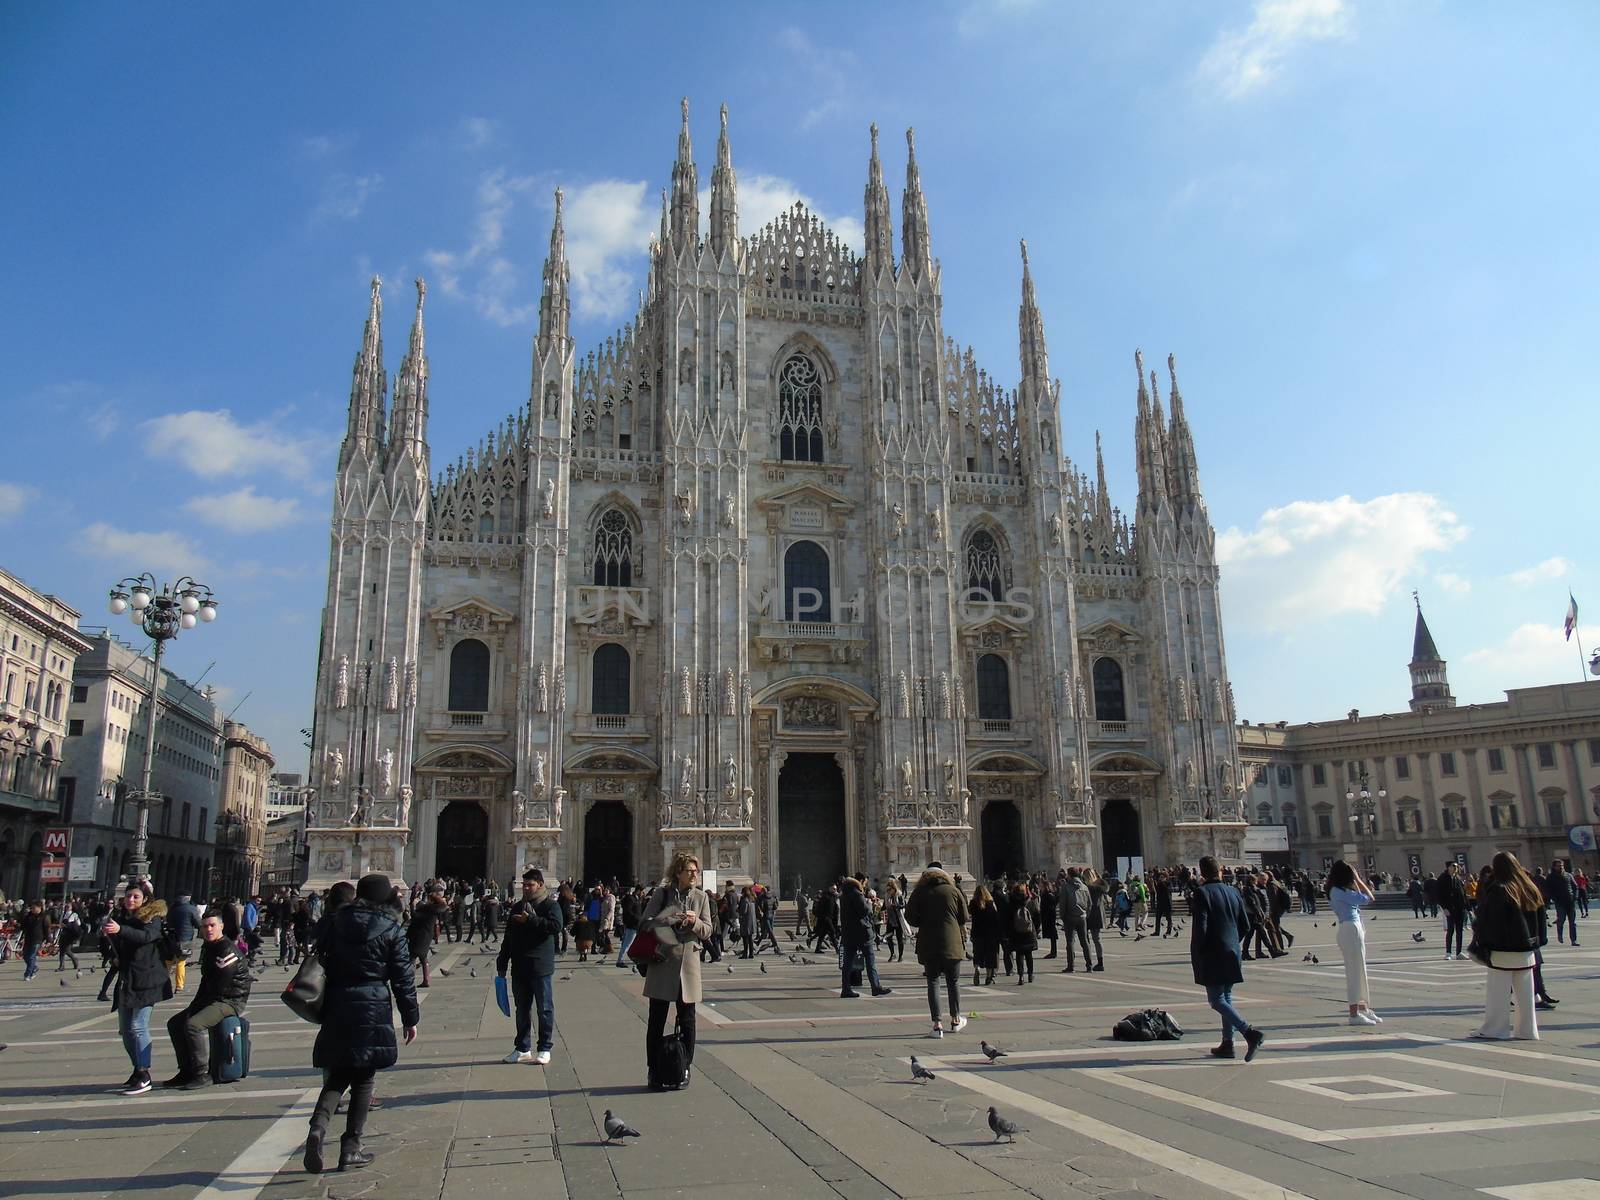 Galleria Vittorio Emanuele and Duomo of Milan by yohananegusse